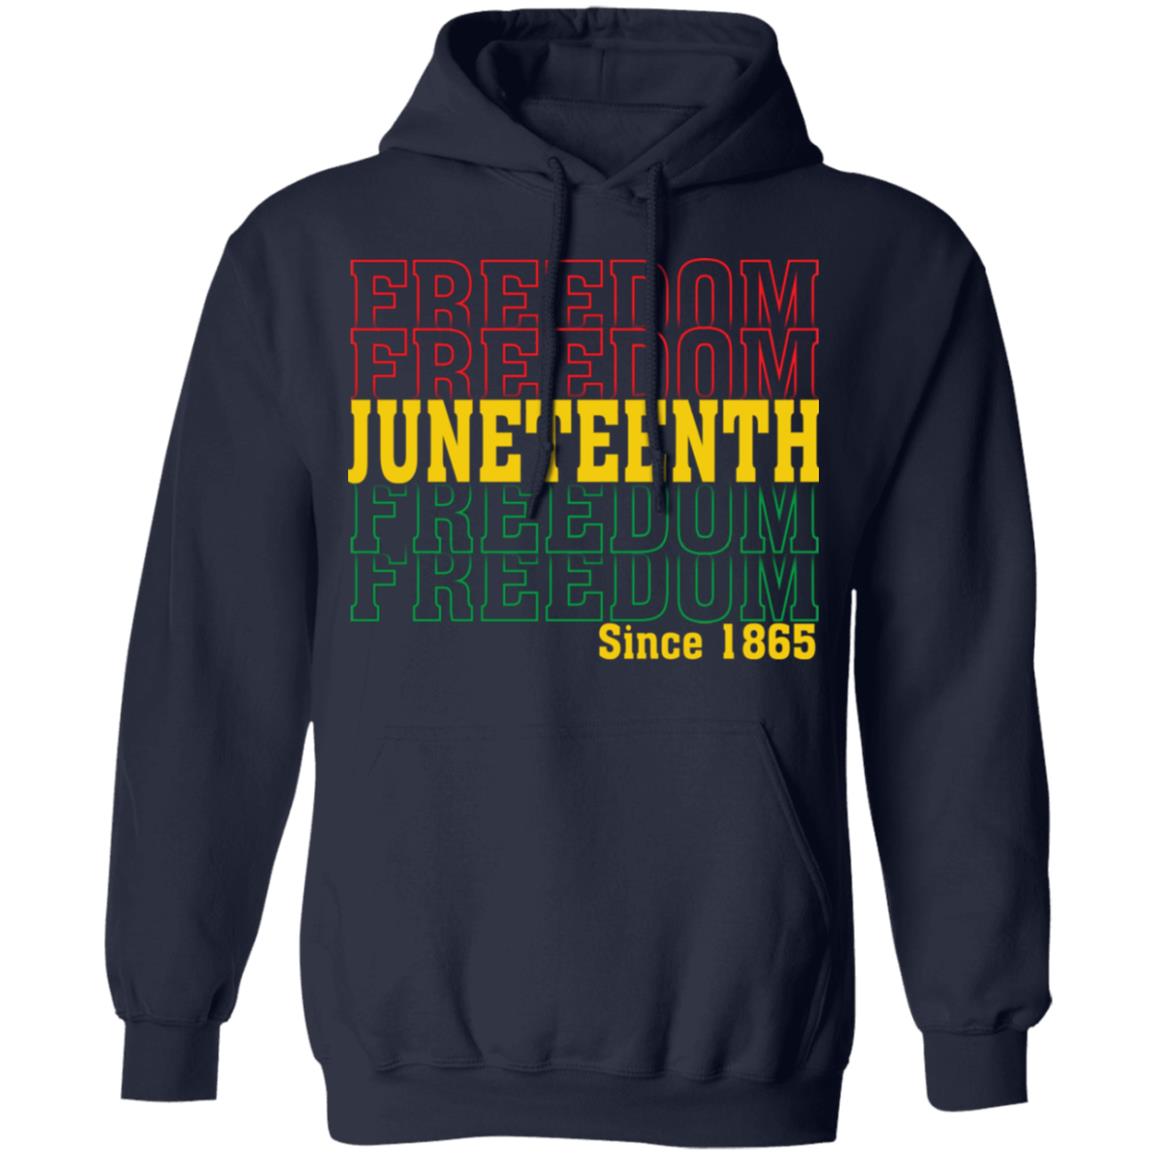 Juneteenth Freedom Since 1865 T-shirt Apparel Gearment Unisex Hoodie Navy S